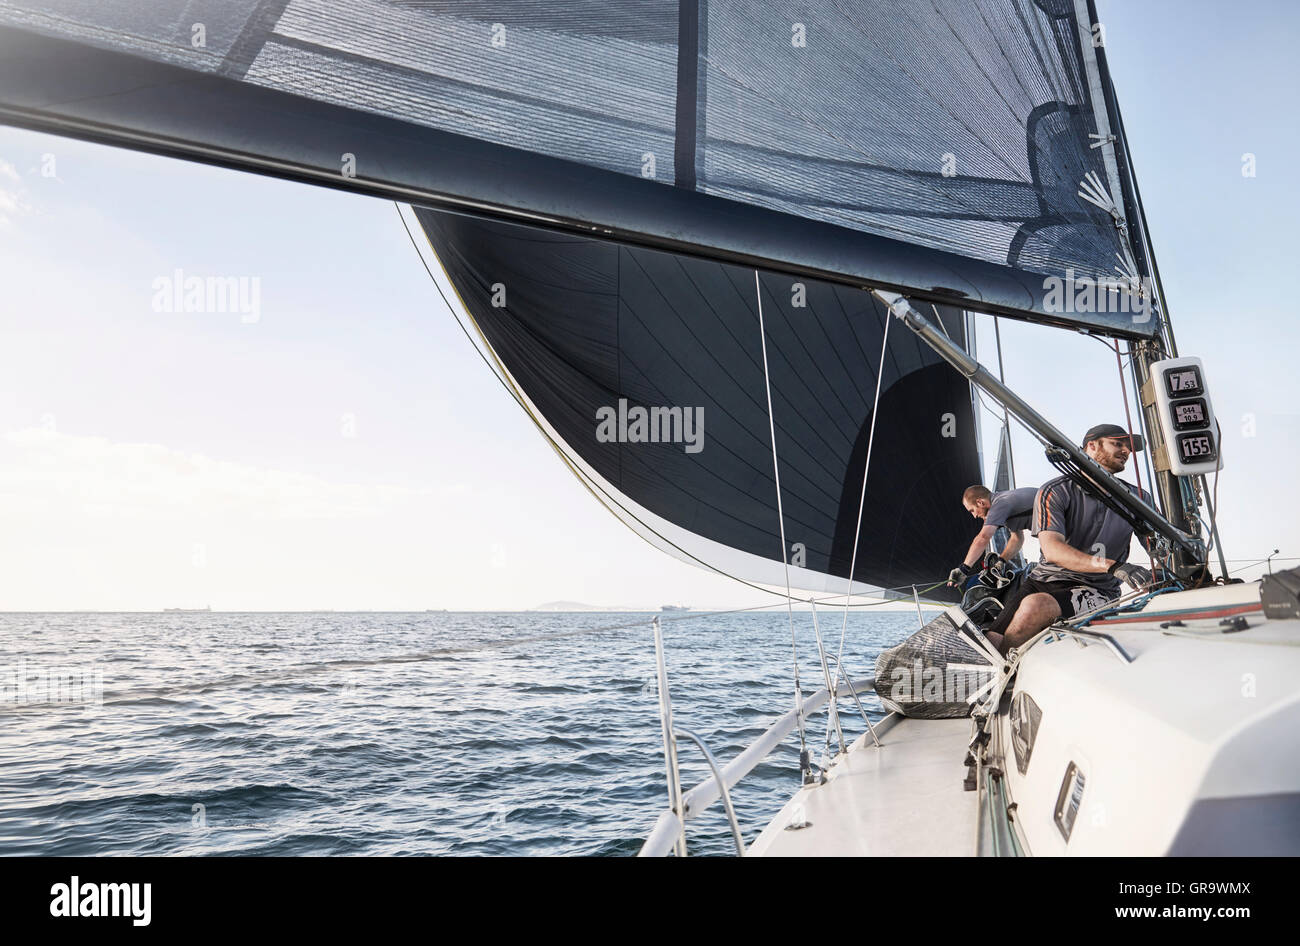 Men sailing Stock Photo